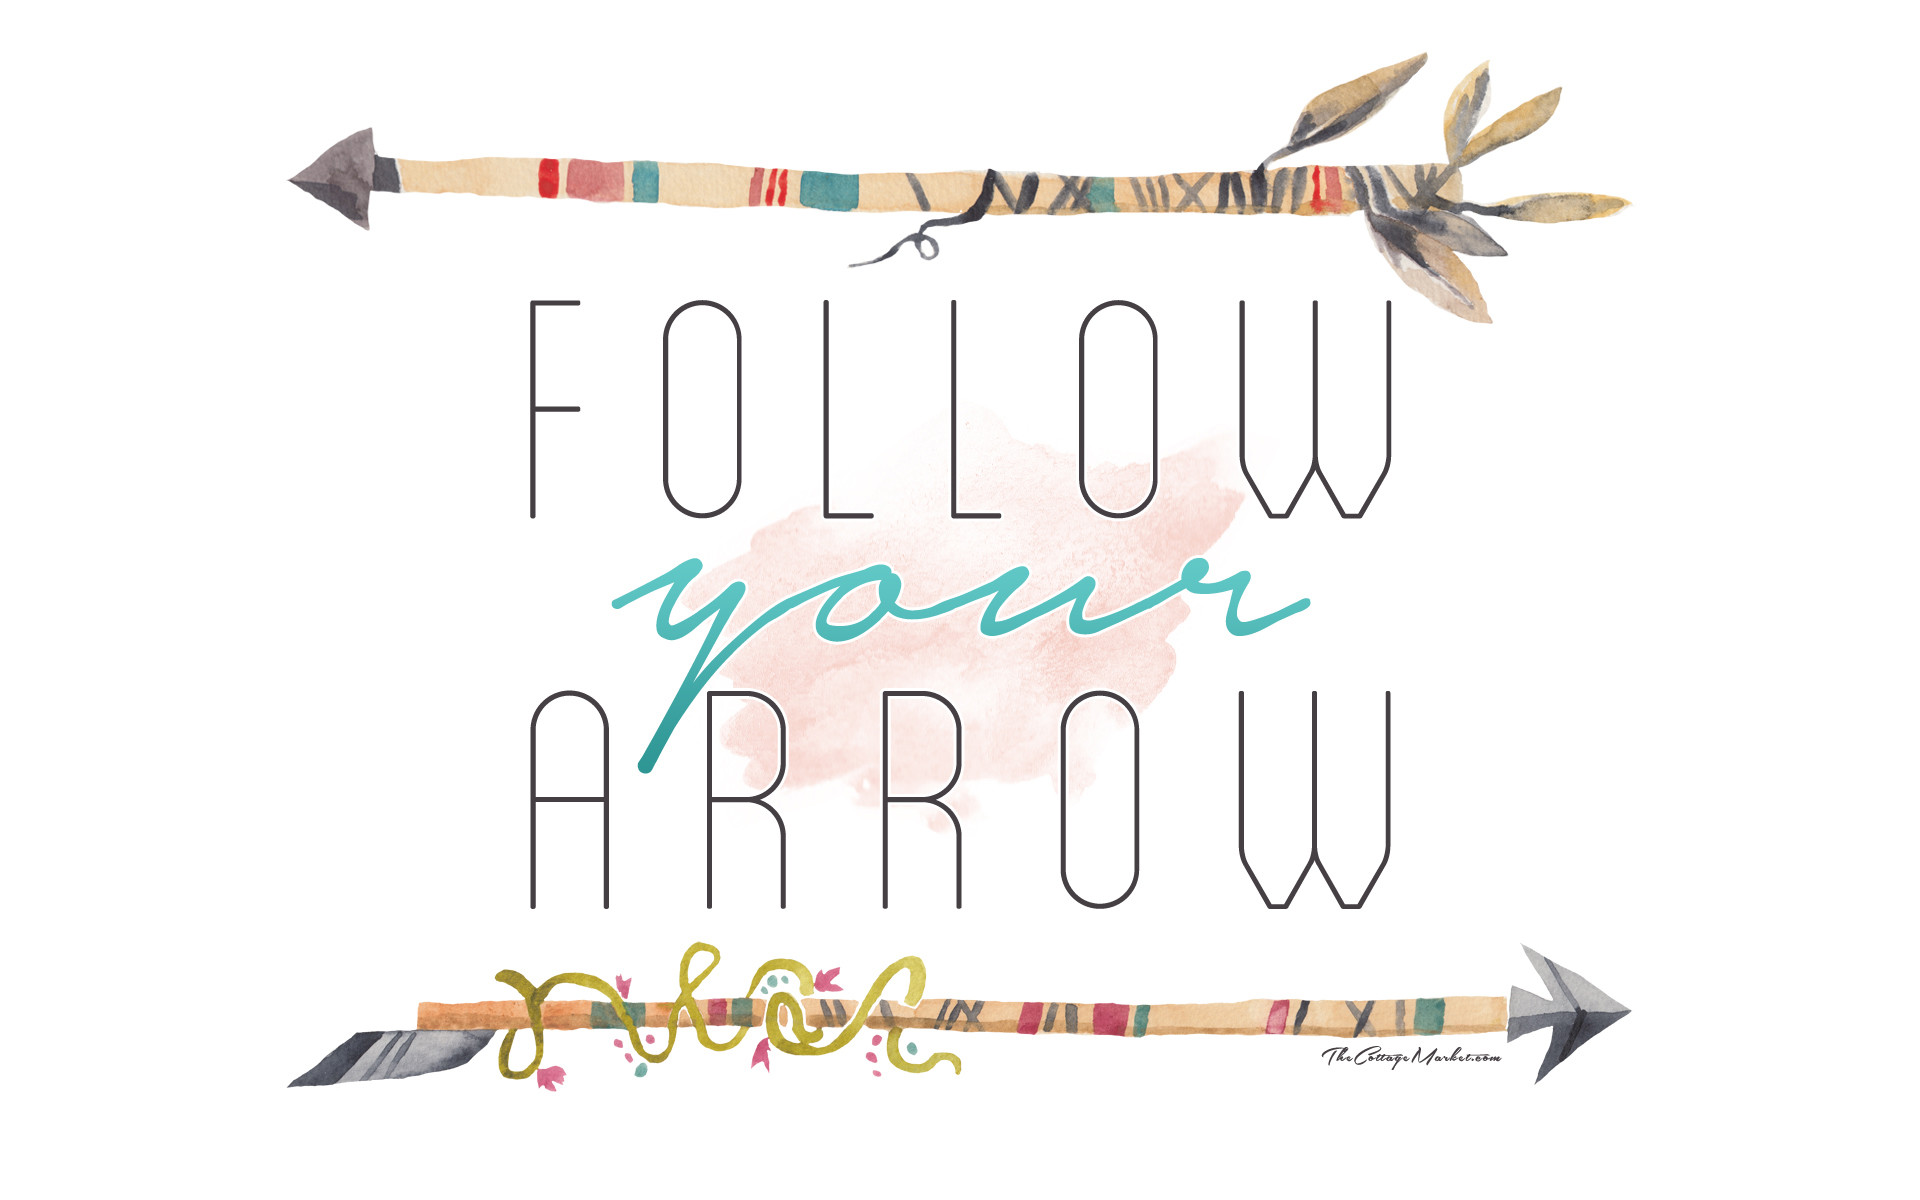 1920x1200 Downloads: Follow Your Arrow Wallpaper - B.May Creative